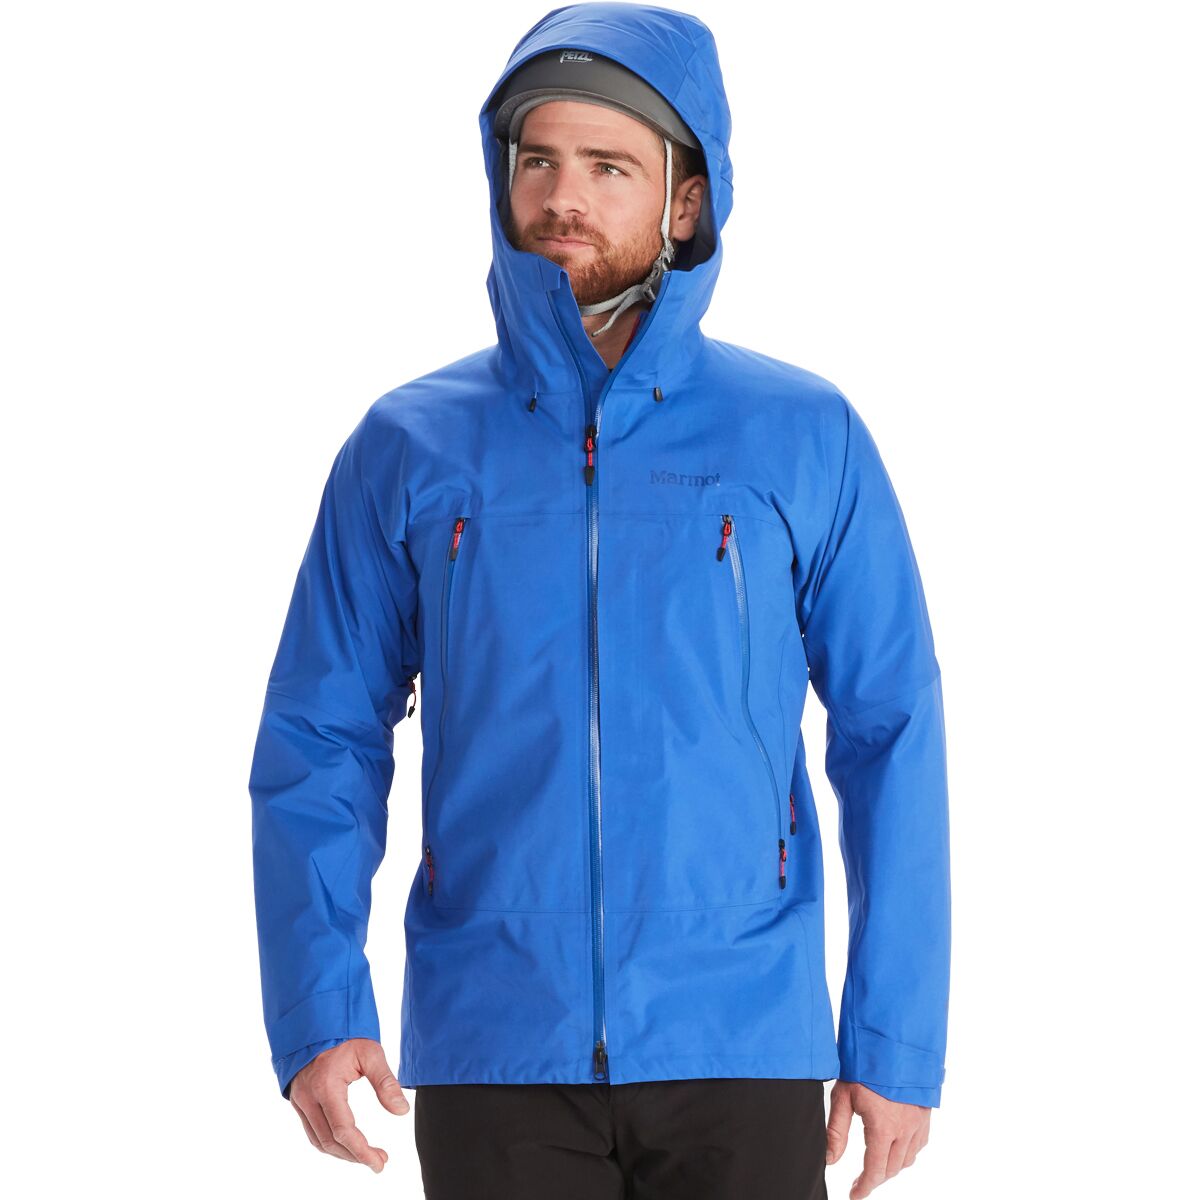 Alpinist GORE-TEX Jacket - Men